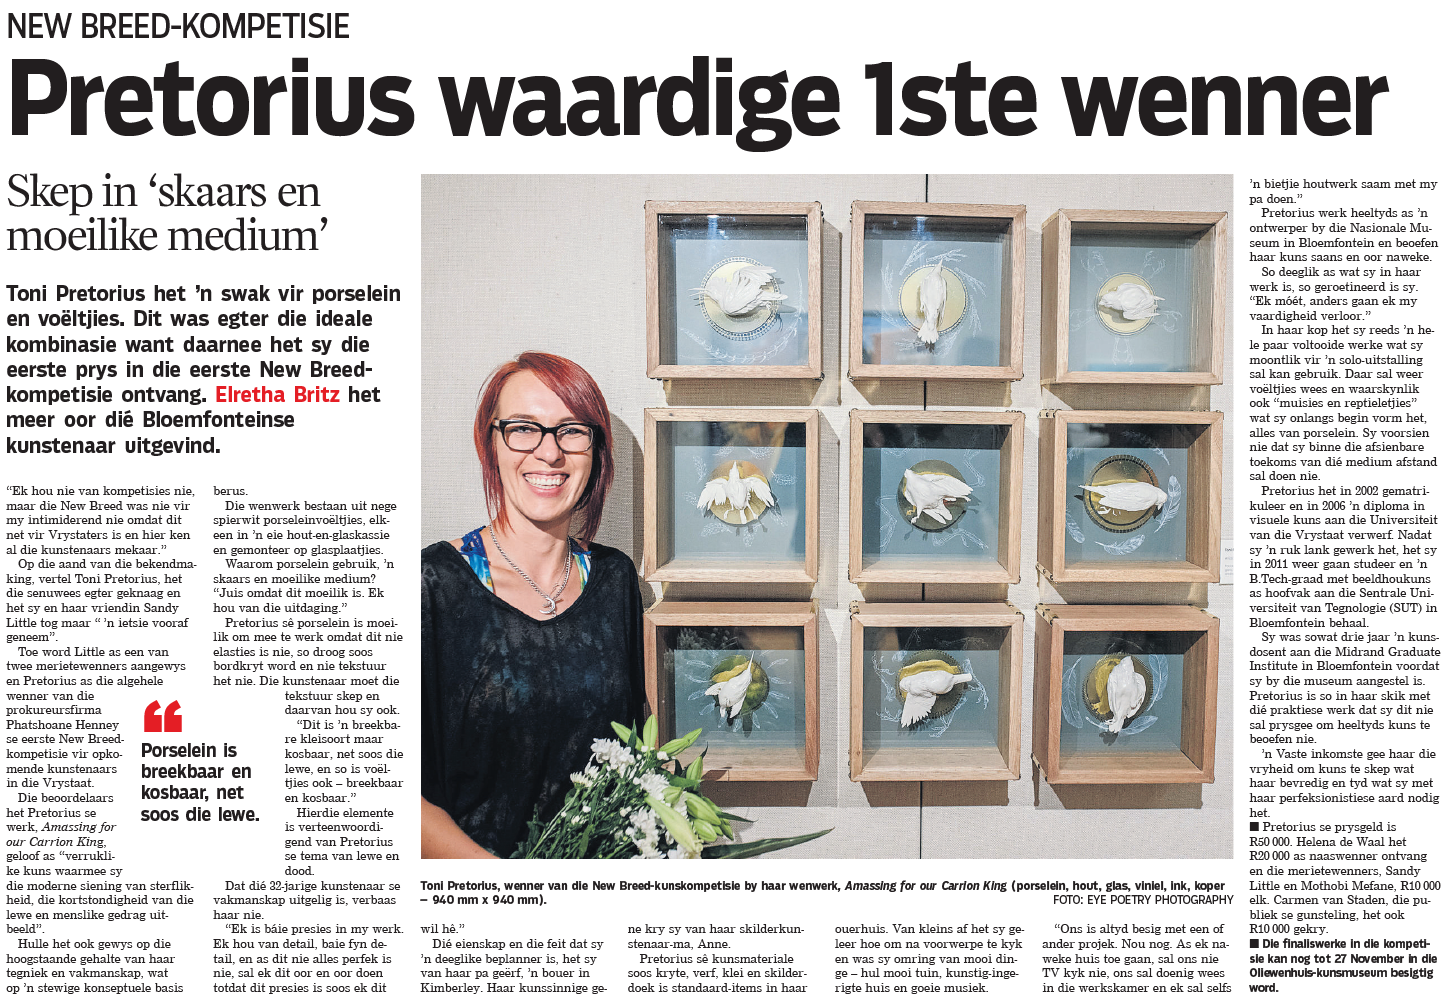 Netwerk24 and Volksblad: Pretorius wins New Breed with 'enchanting art'